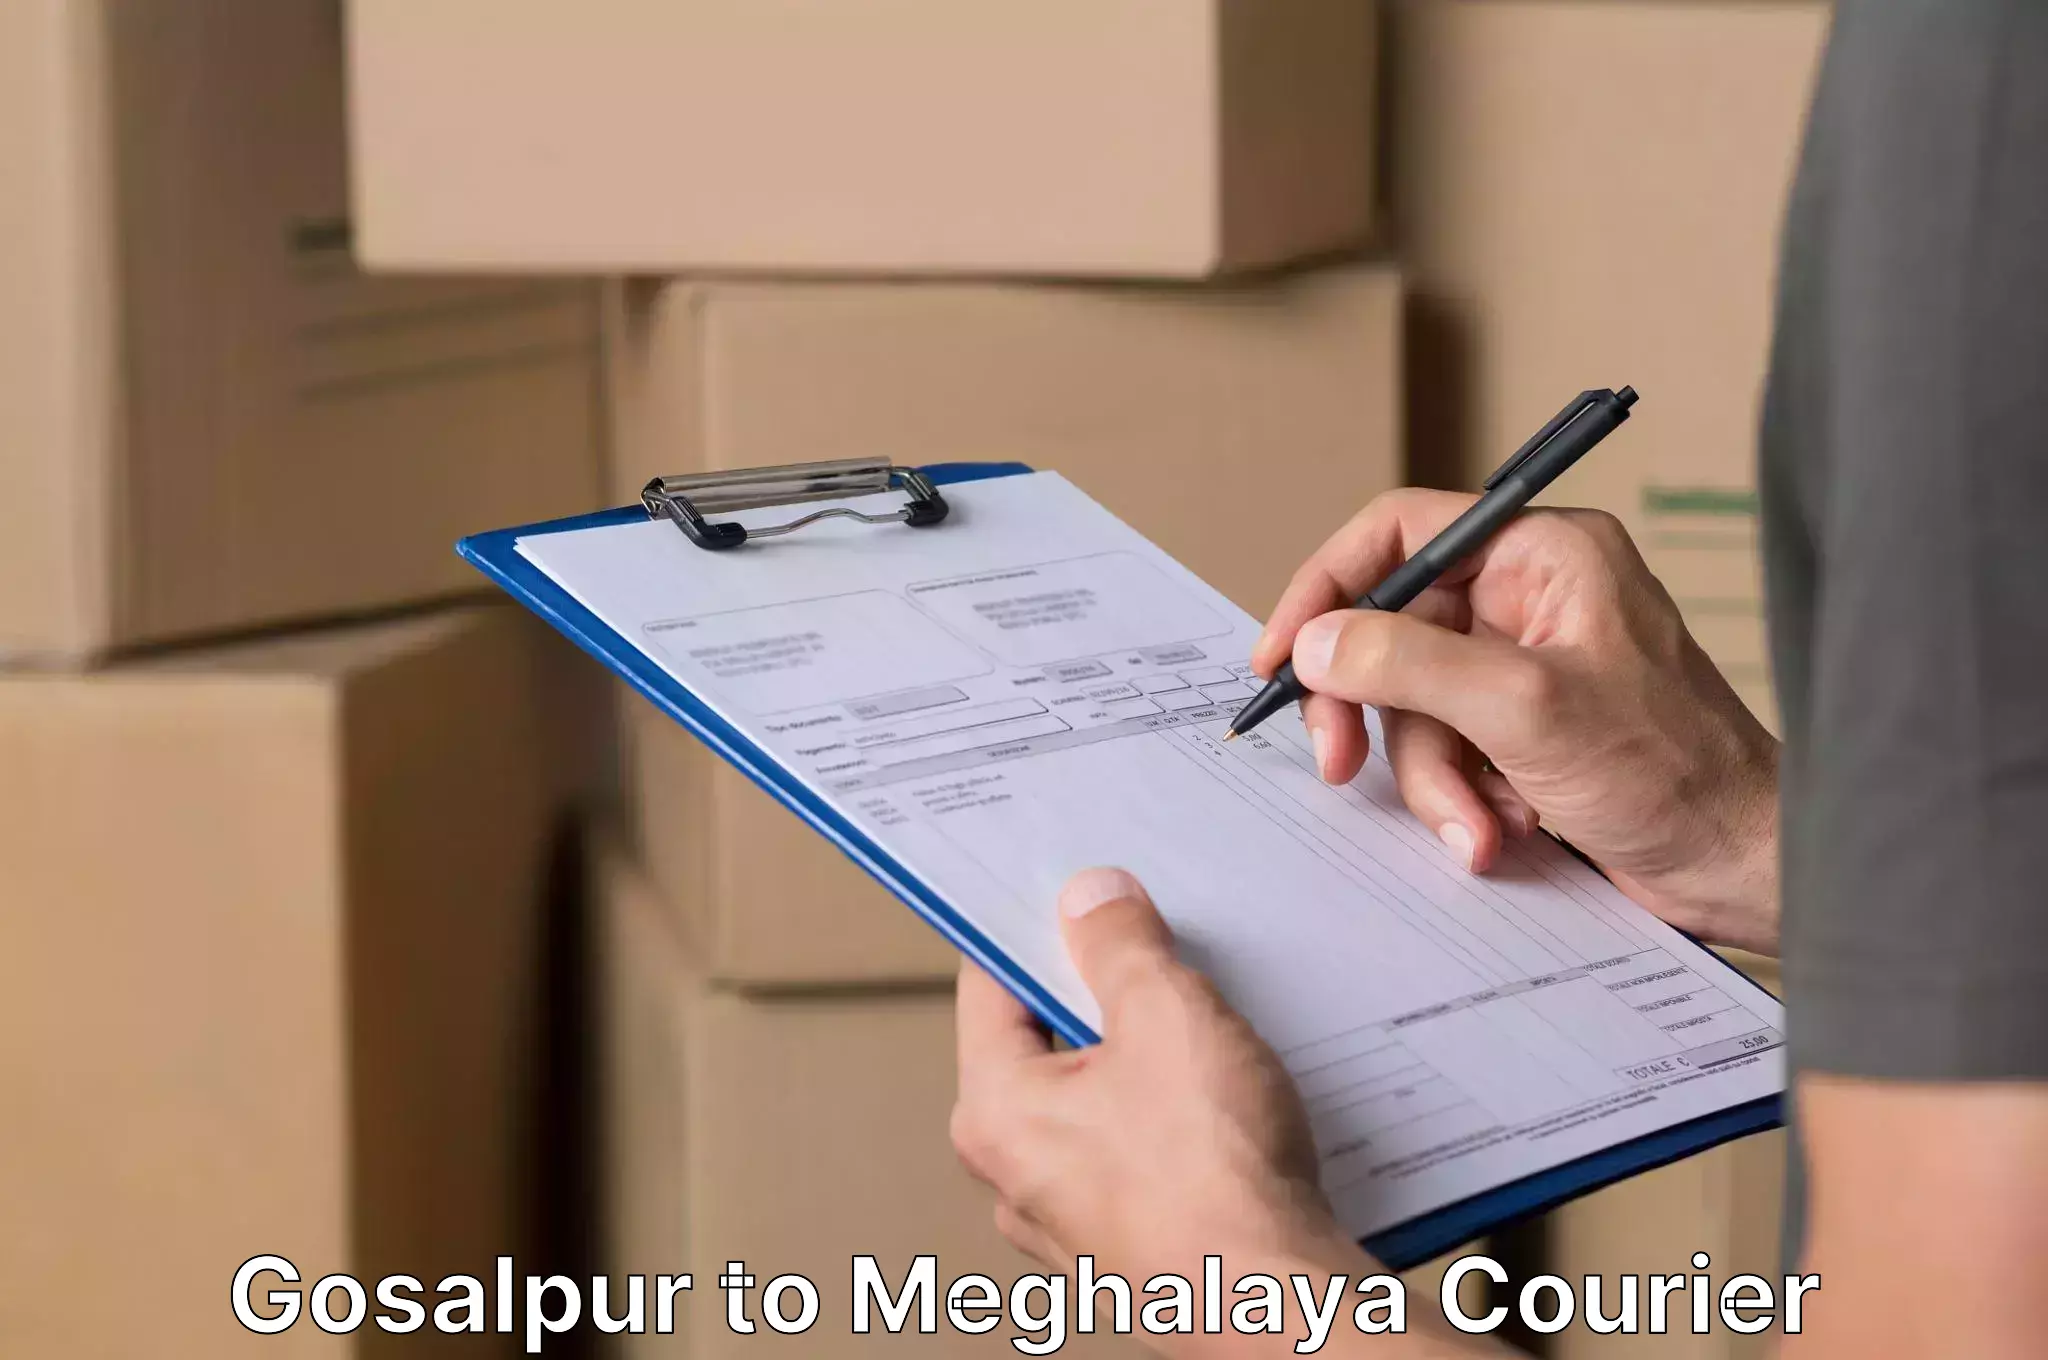 Budget-friendly moving services Gosalpur to Meghalaya